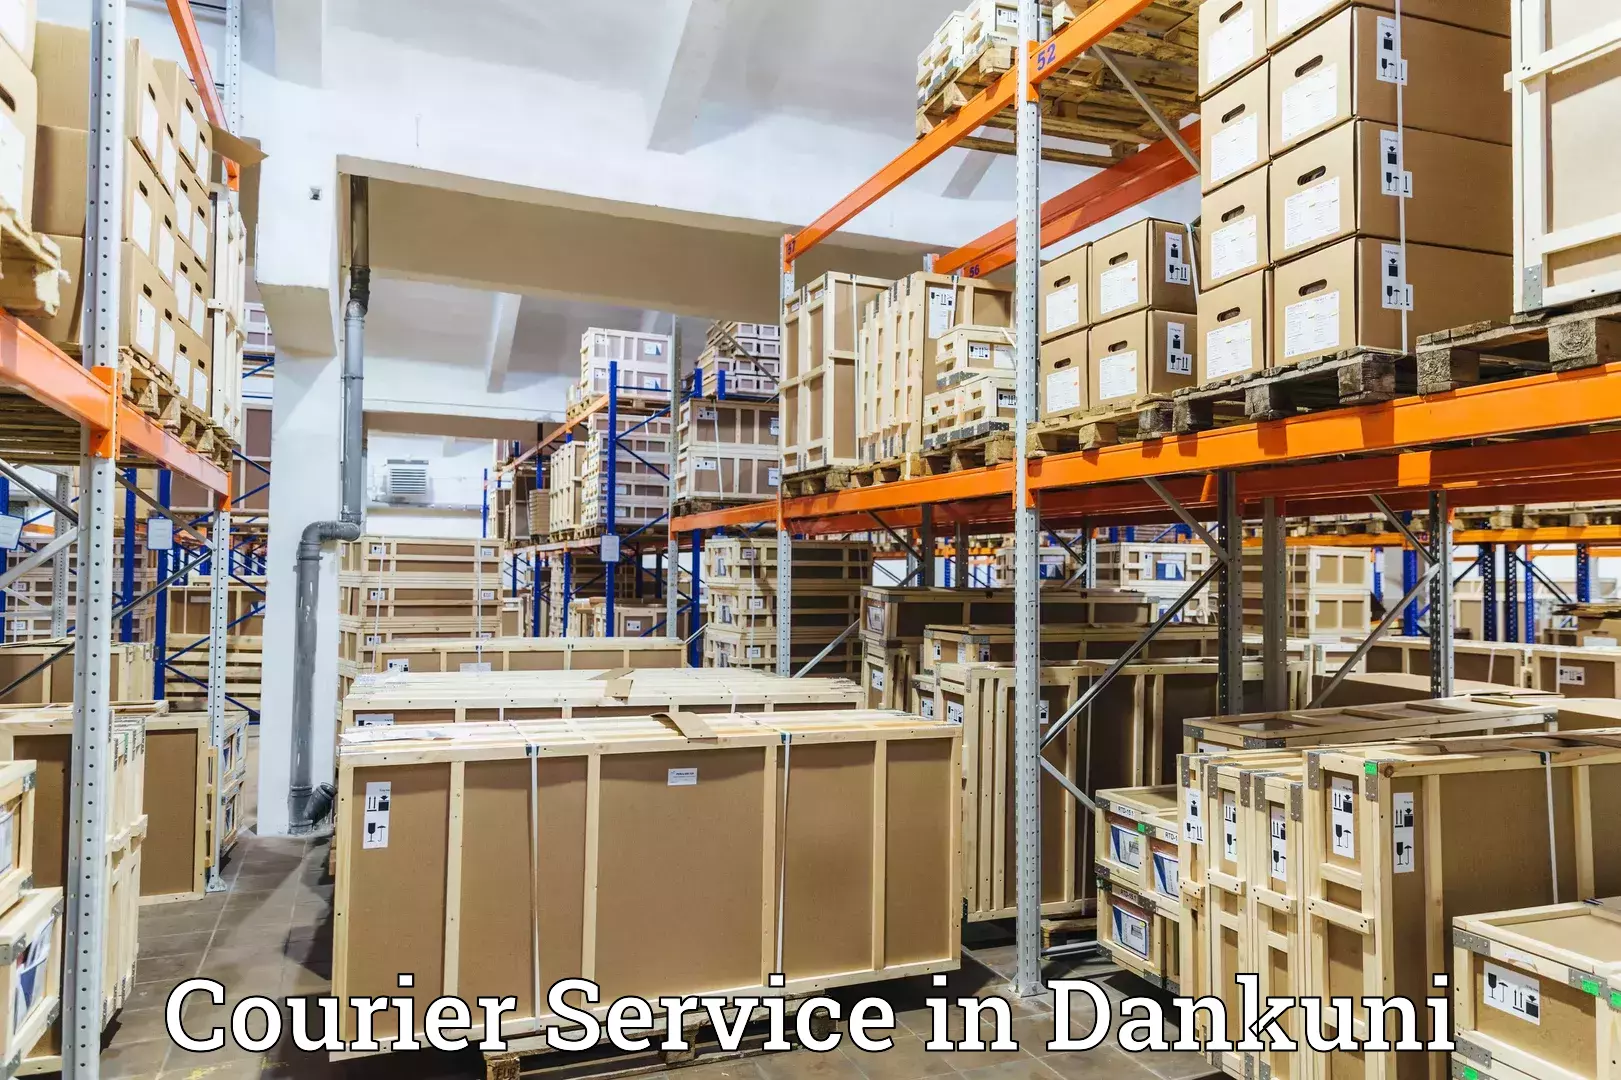 Courier services in Dankuni